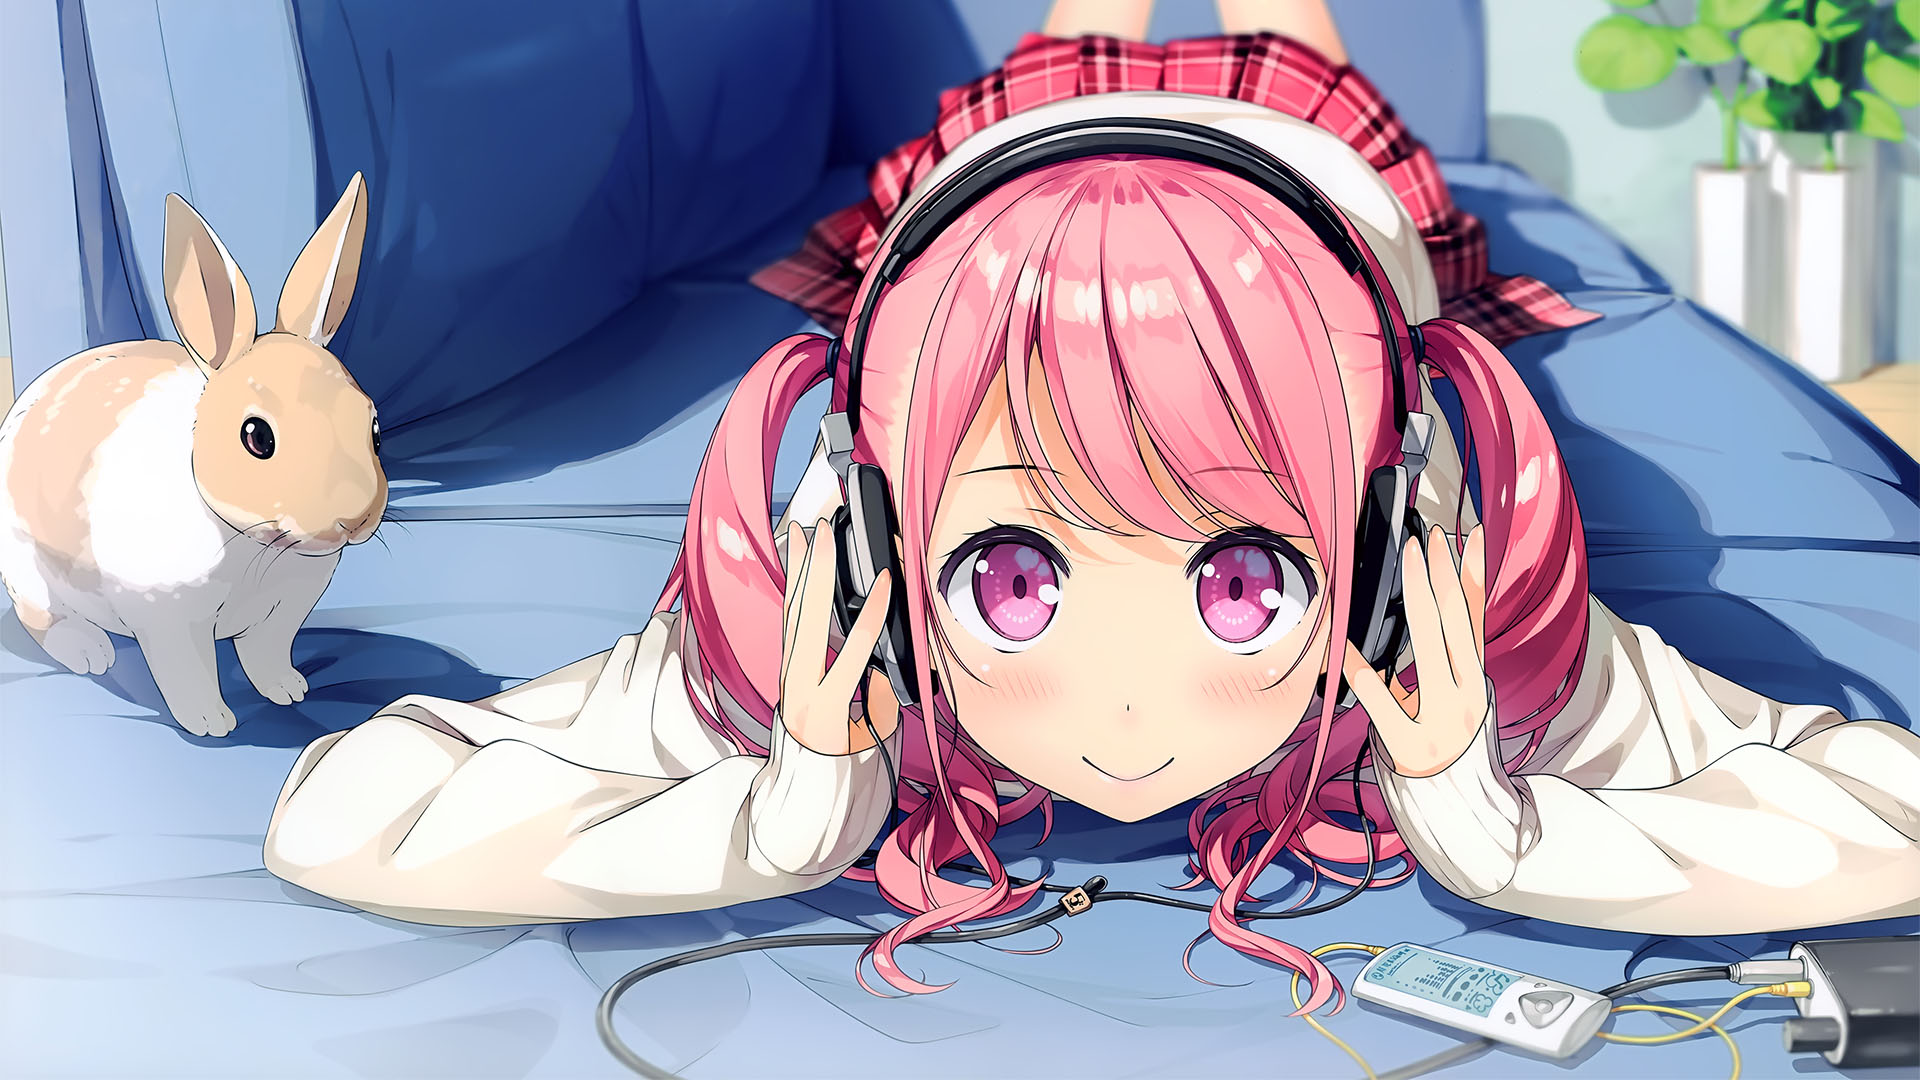 fond d'écran anime girl,dessin animé,anime,équipement audio,oreille,bouche